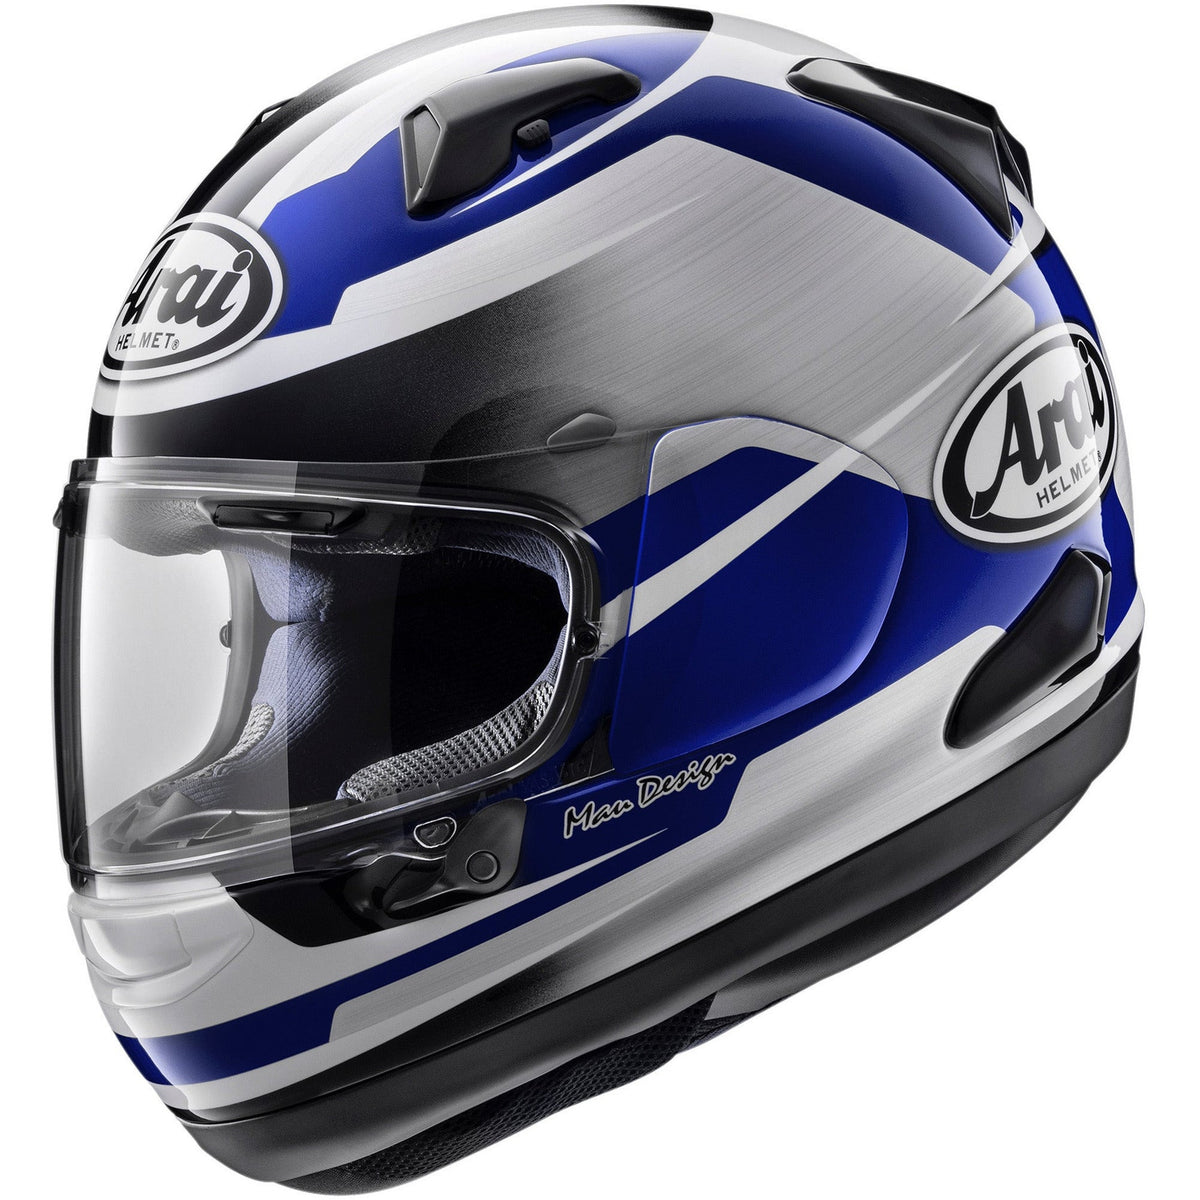 Quantum-X Helmet (Steel Blue)